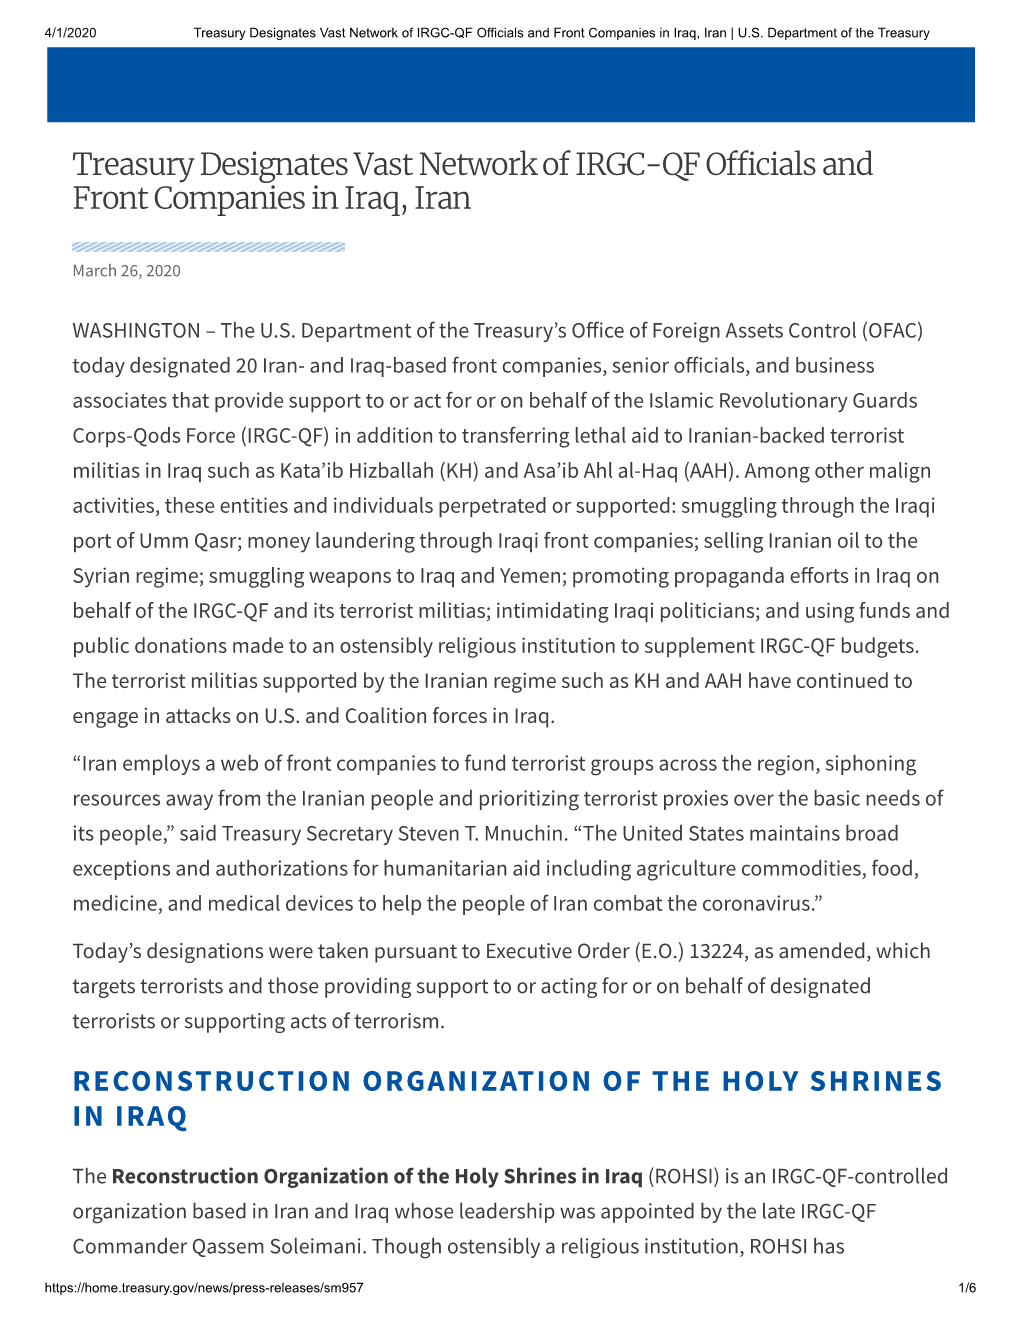 Treasury Designates Vast Network of IRGC-QF Officials and Front Companies in Iraq, Iran | U.S